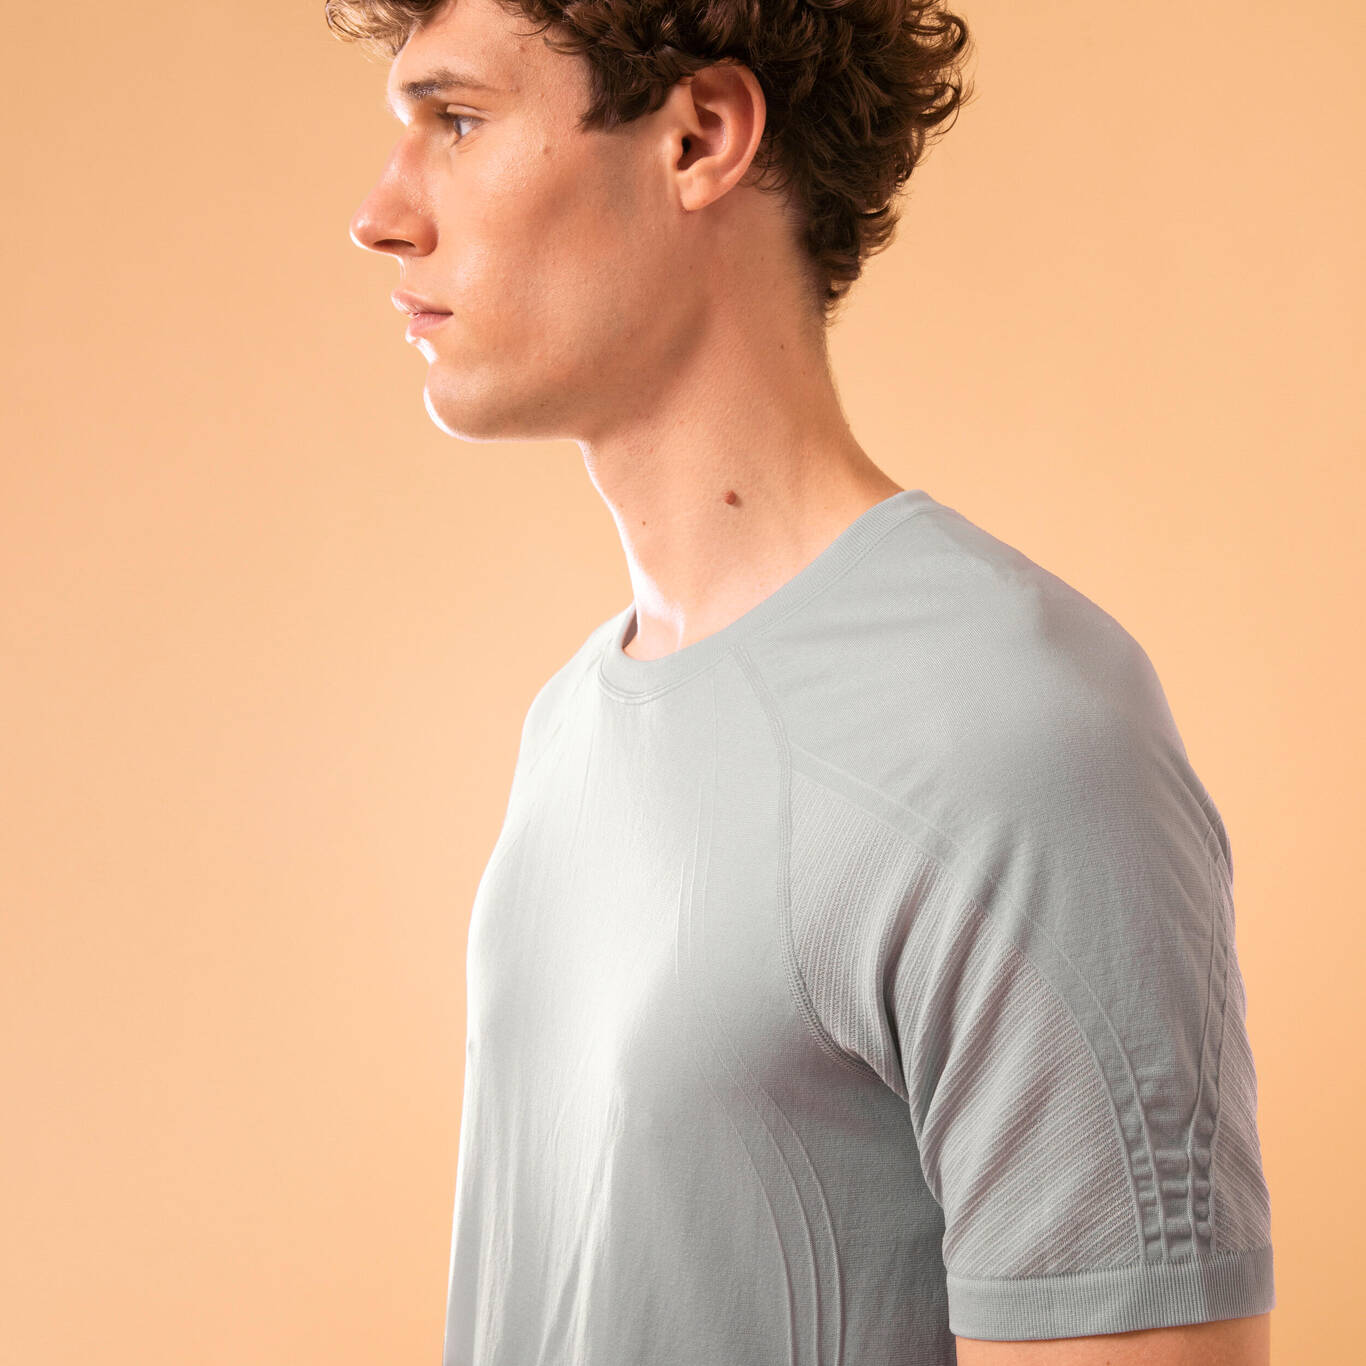 Men's Seamless Yoga T-Shirt Second Skin - Light Grey - Decathlon